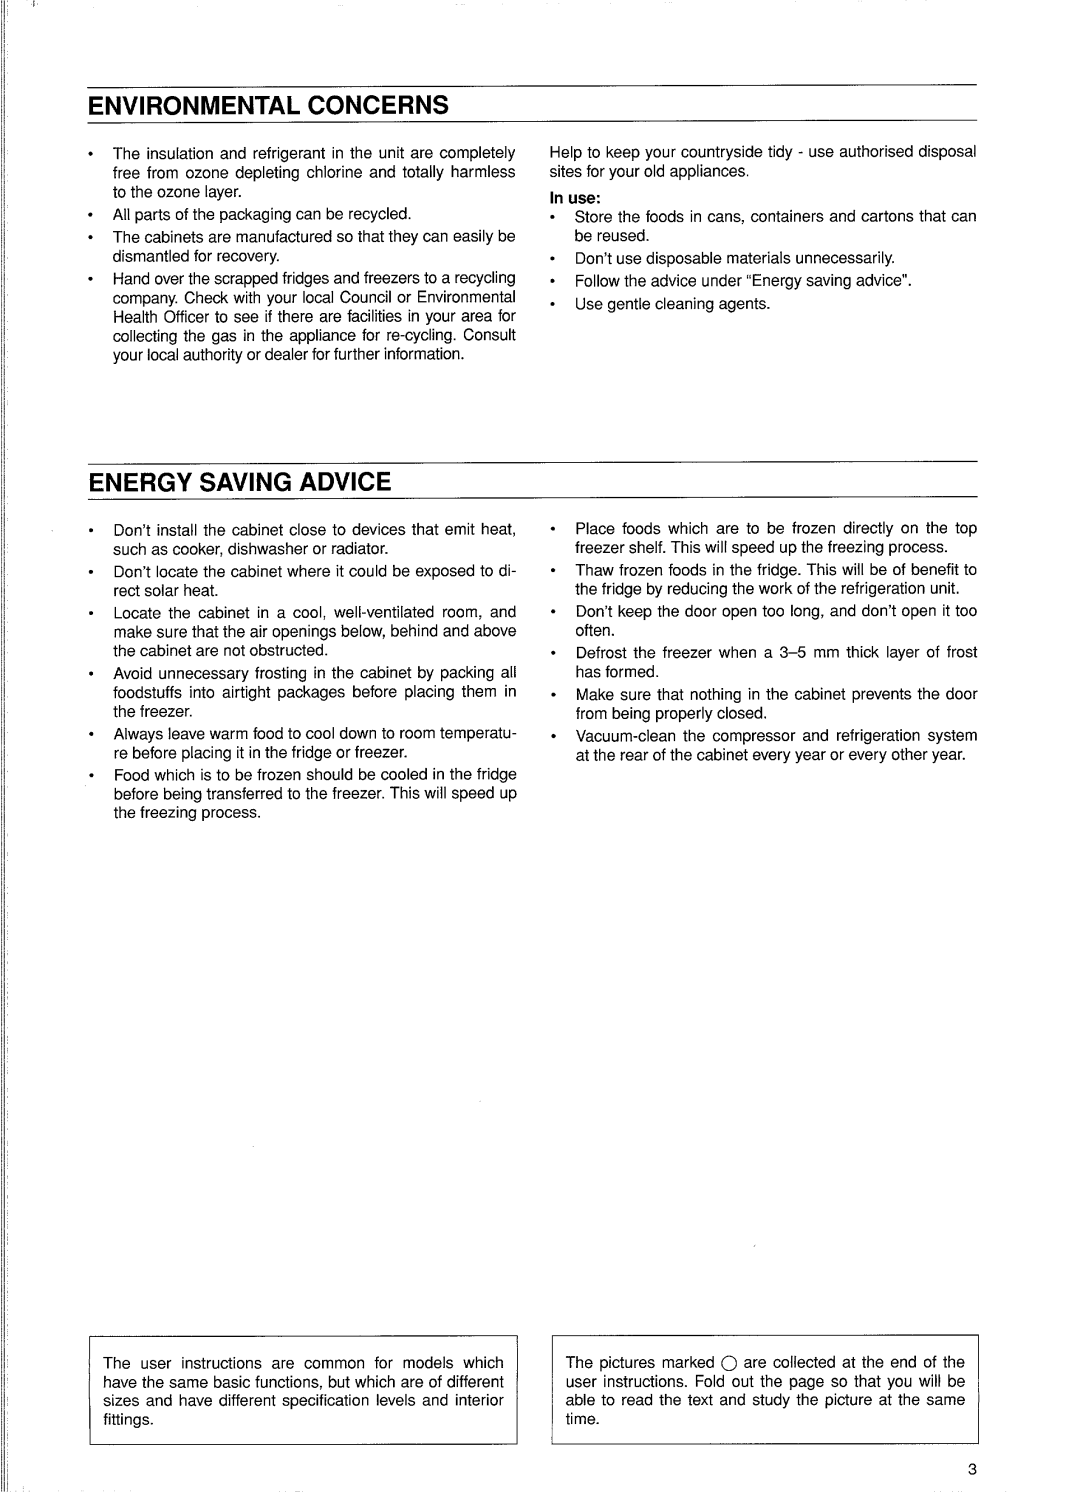 Electrolux U01055 manual 